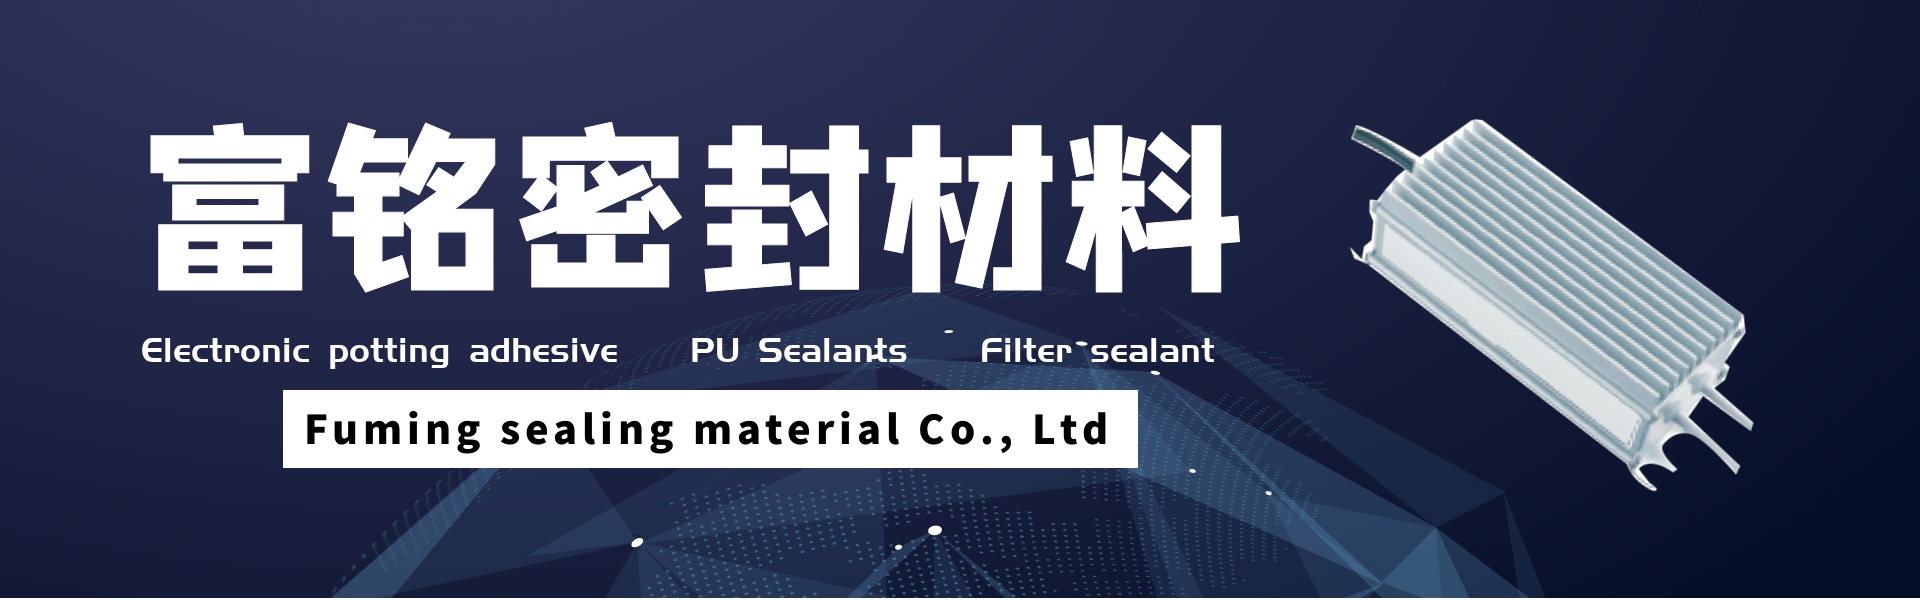 sigillante elettronico, sigillanti PU, sigillante per filtri,Dongguan fuming sealing material Co., Ltd